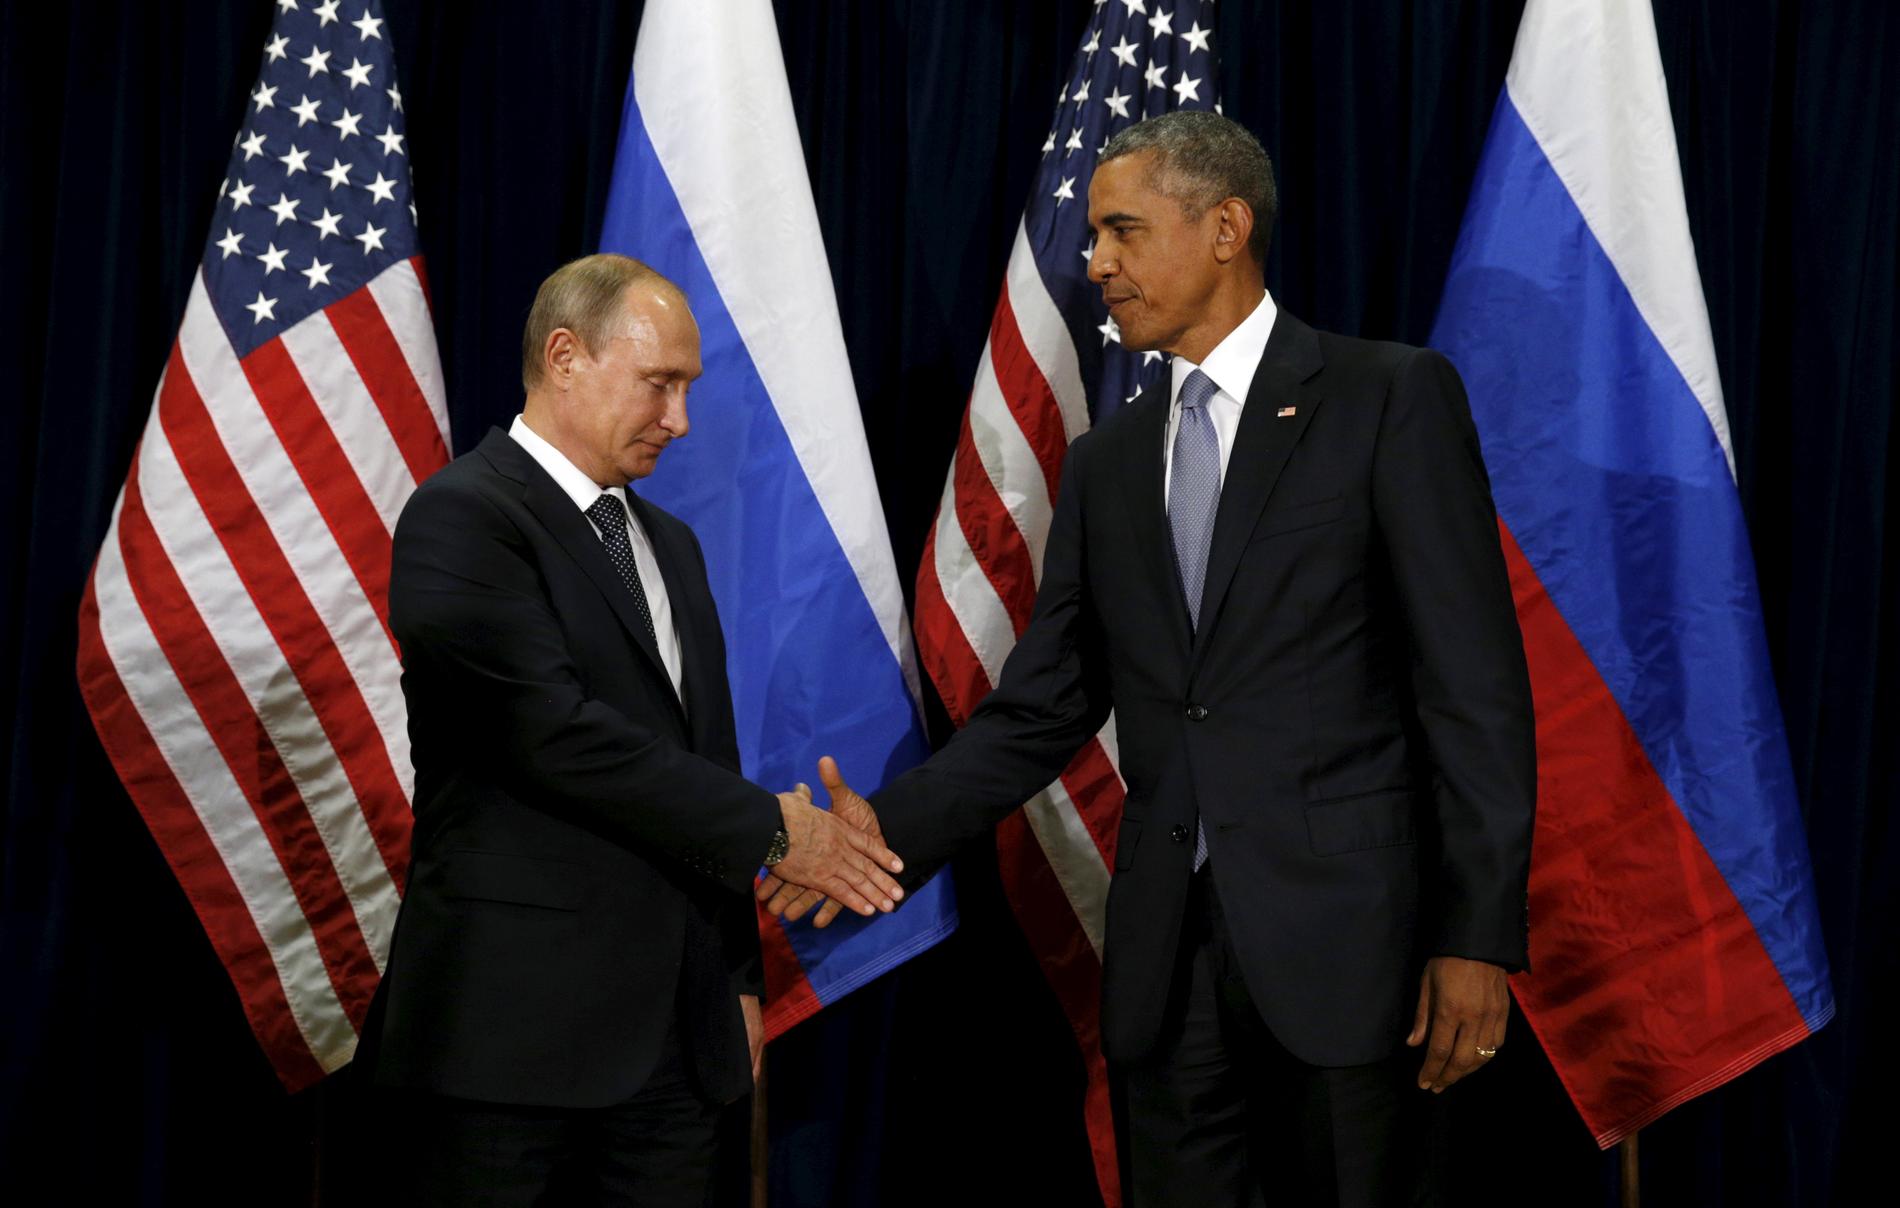 Rysslands president Vladimir Putin skakar hand med sin amerikanske kollega Barack Obama i samband med FN mötet i New York.